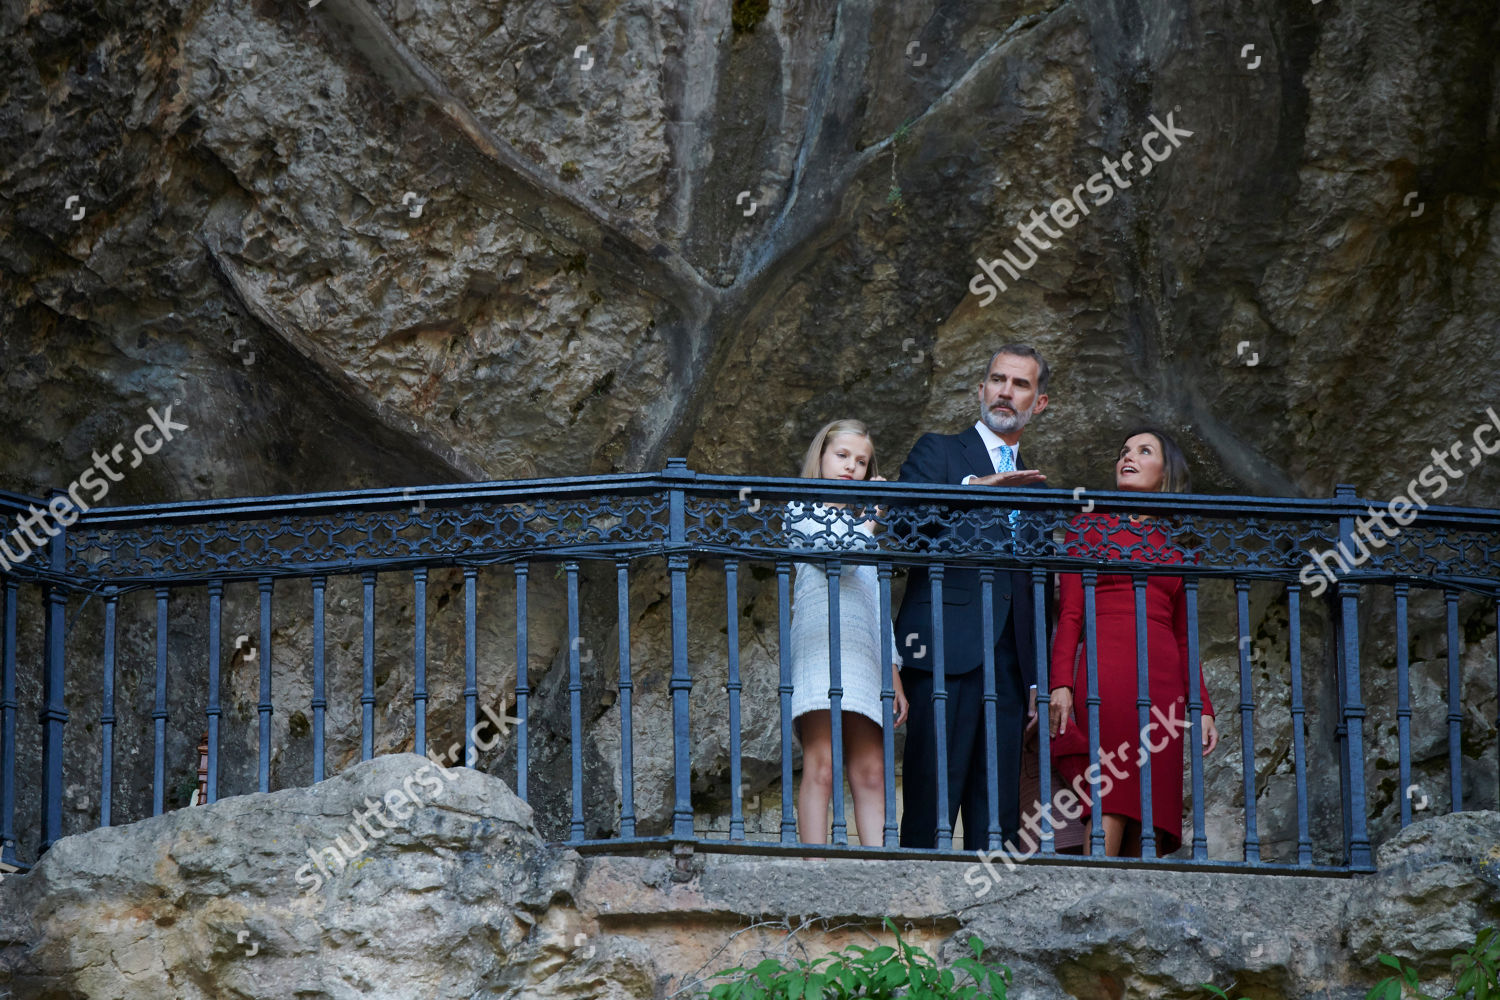 spanish-royals-visit-to-asturias-spain-shutterstock-editorial-9876961n.jpg